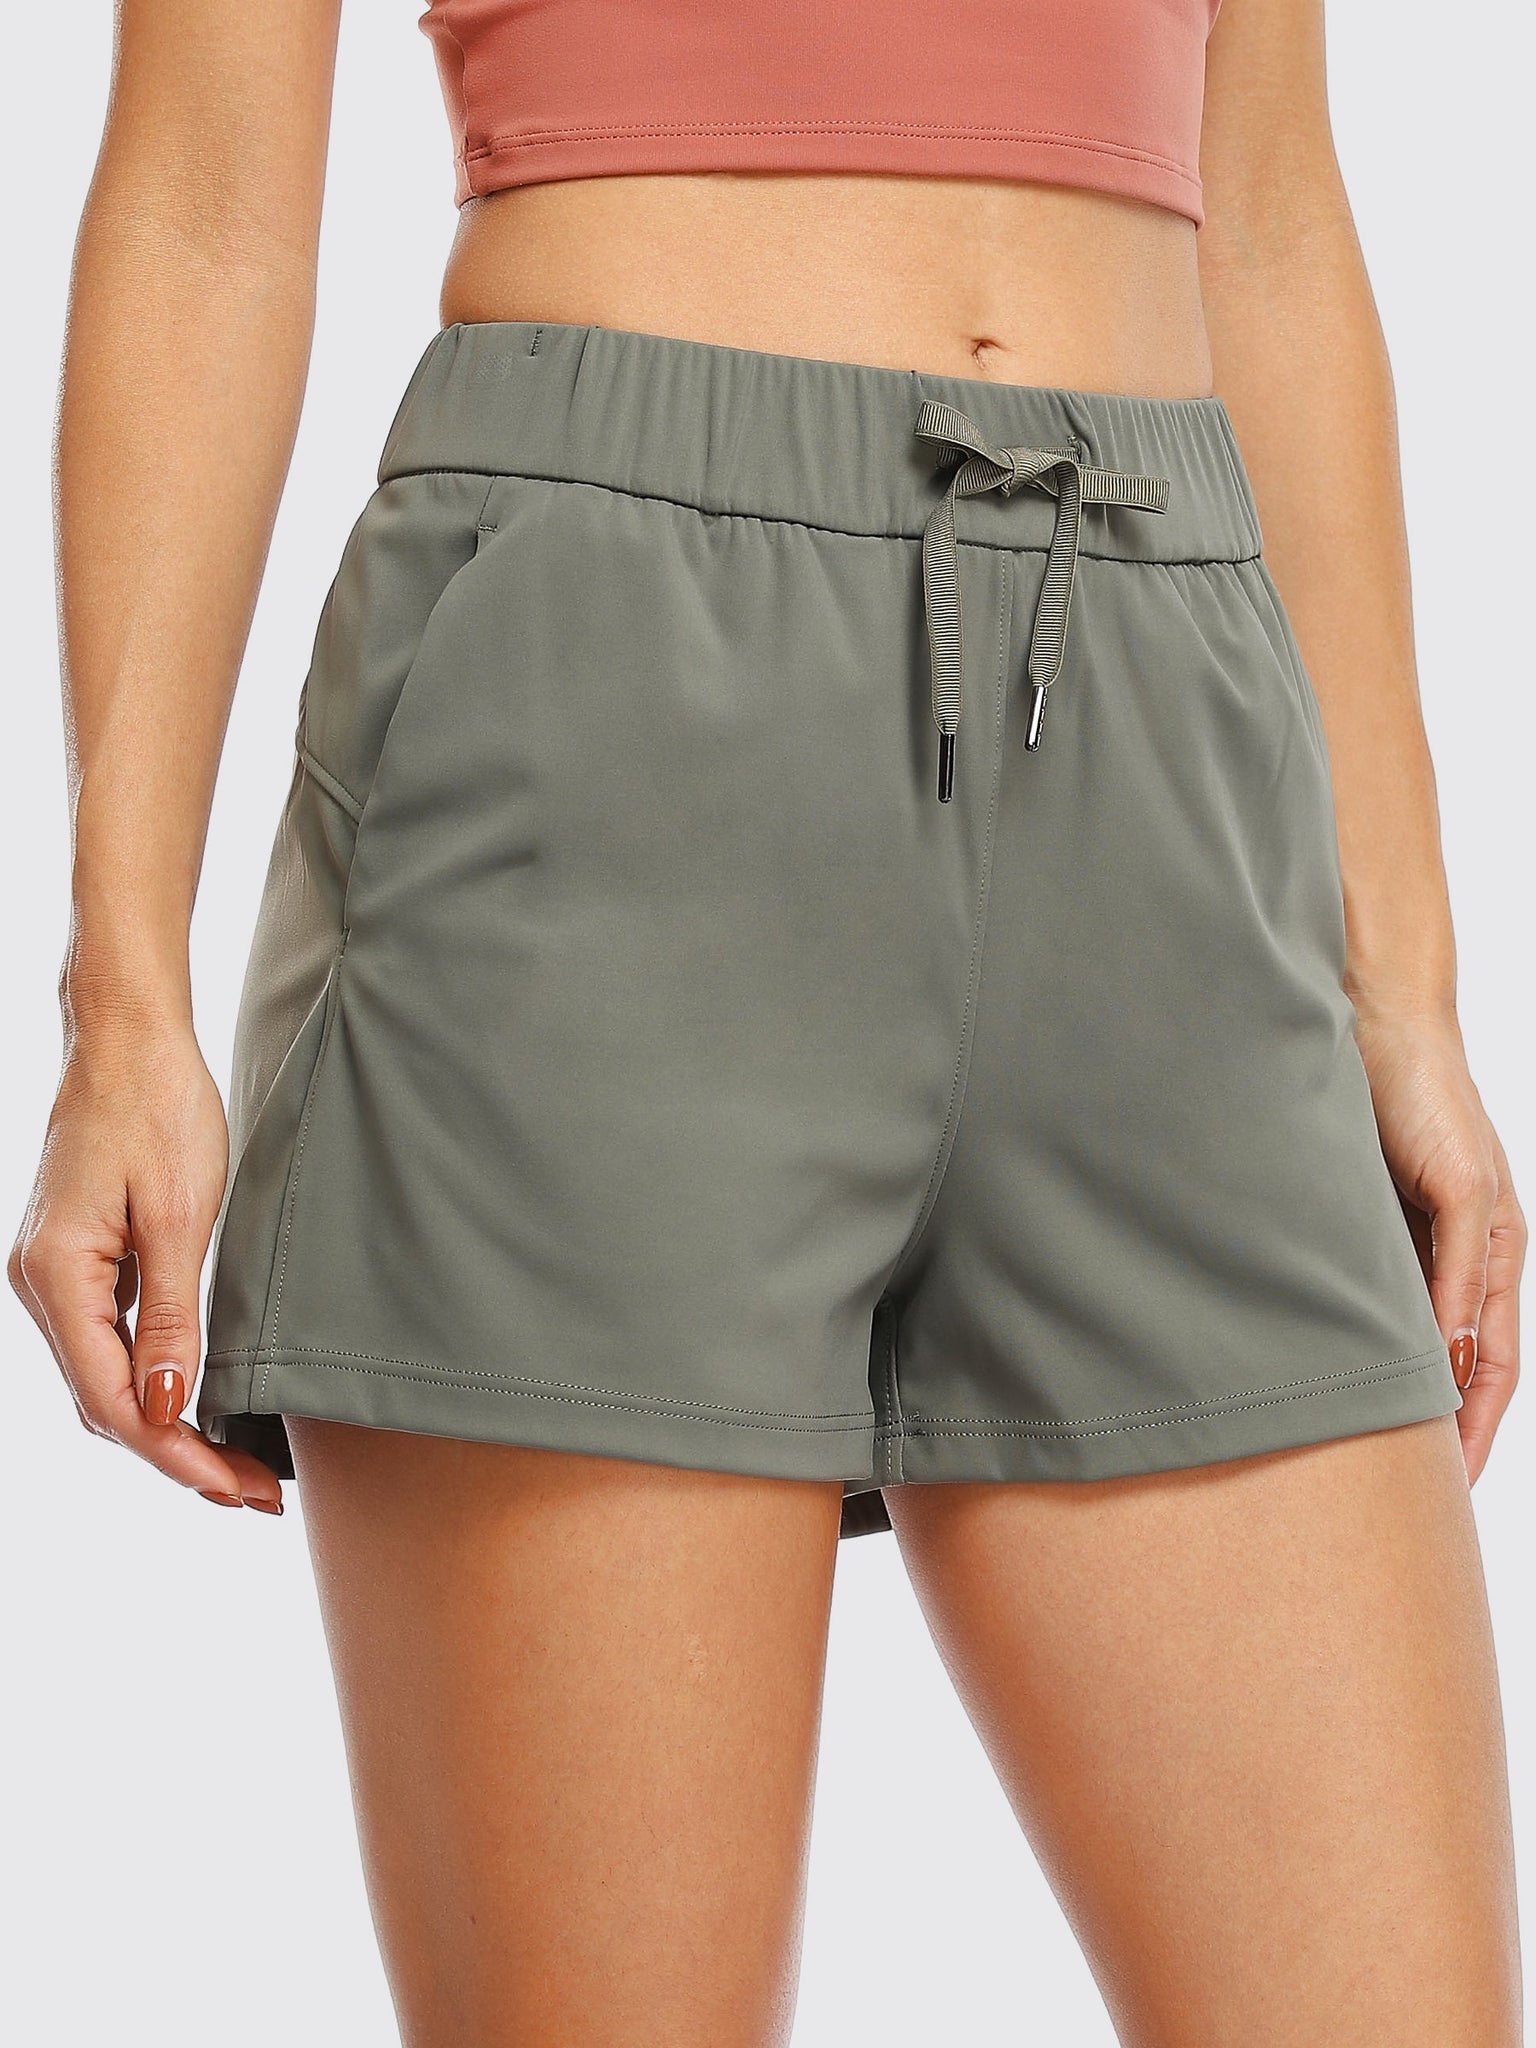 Willit Women's Summer 2.5 Inch Shorts_Olive Green3